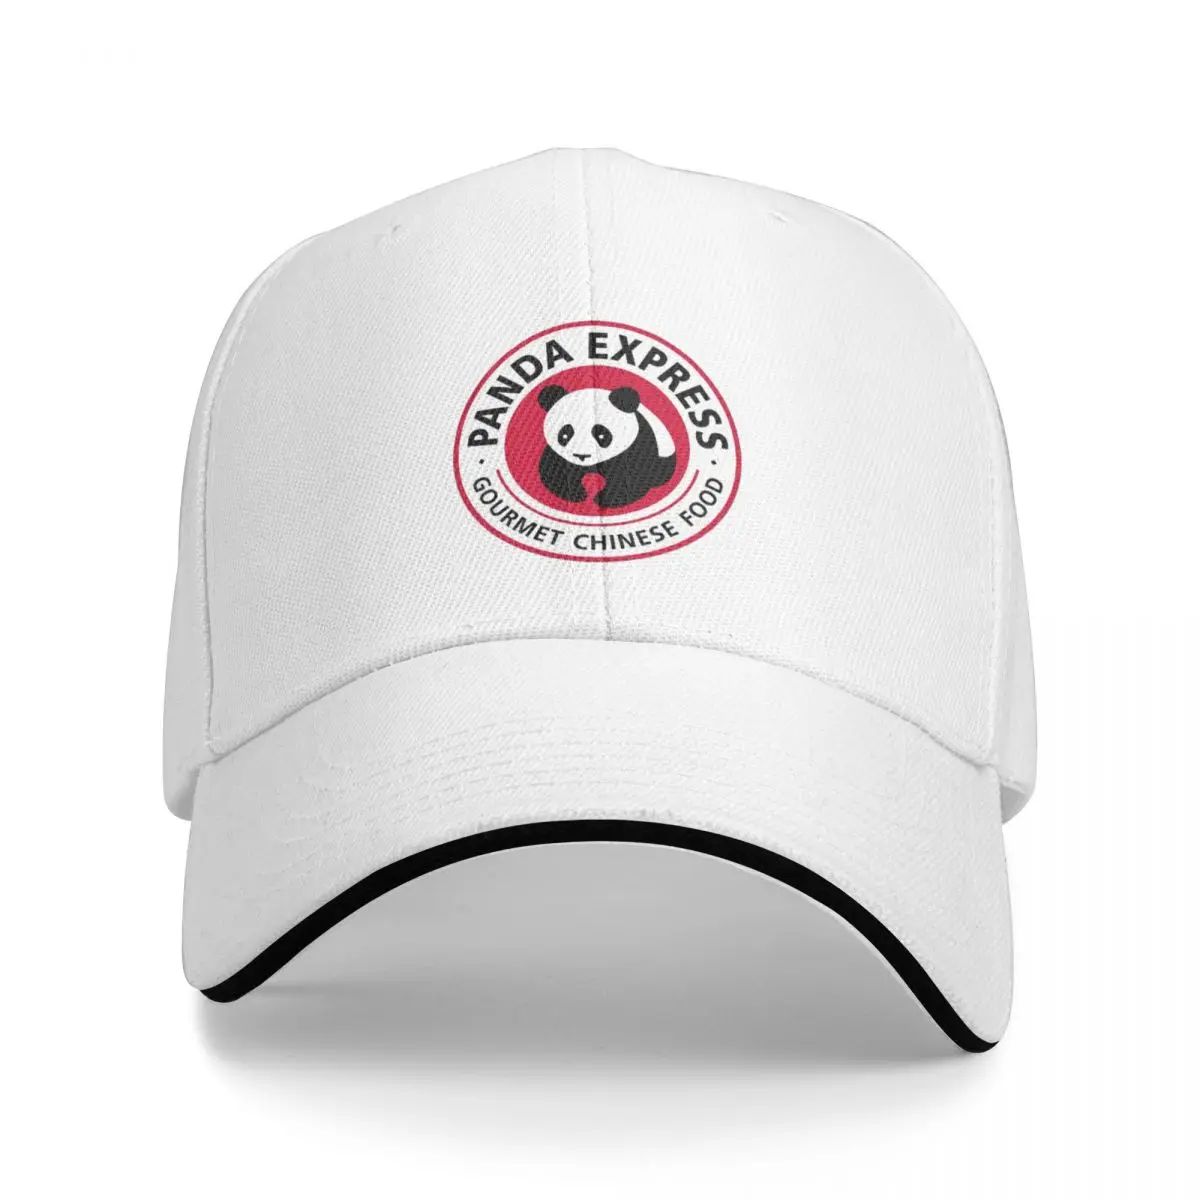 BEST SELLER - Panda Express Cap Fashion Casual Baseball Caps Adjustable Hat Hip Hop Summer Unisex Baseball Hats